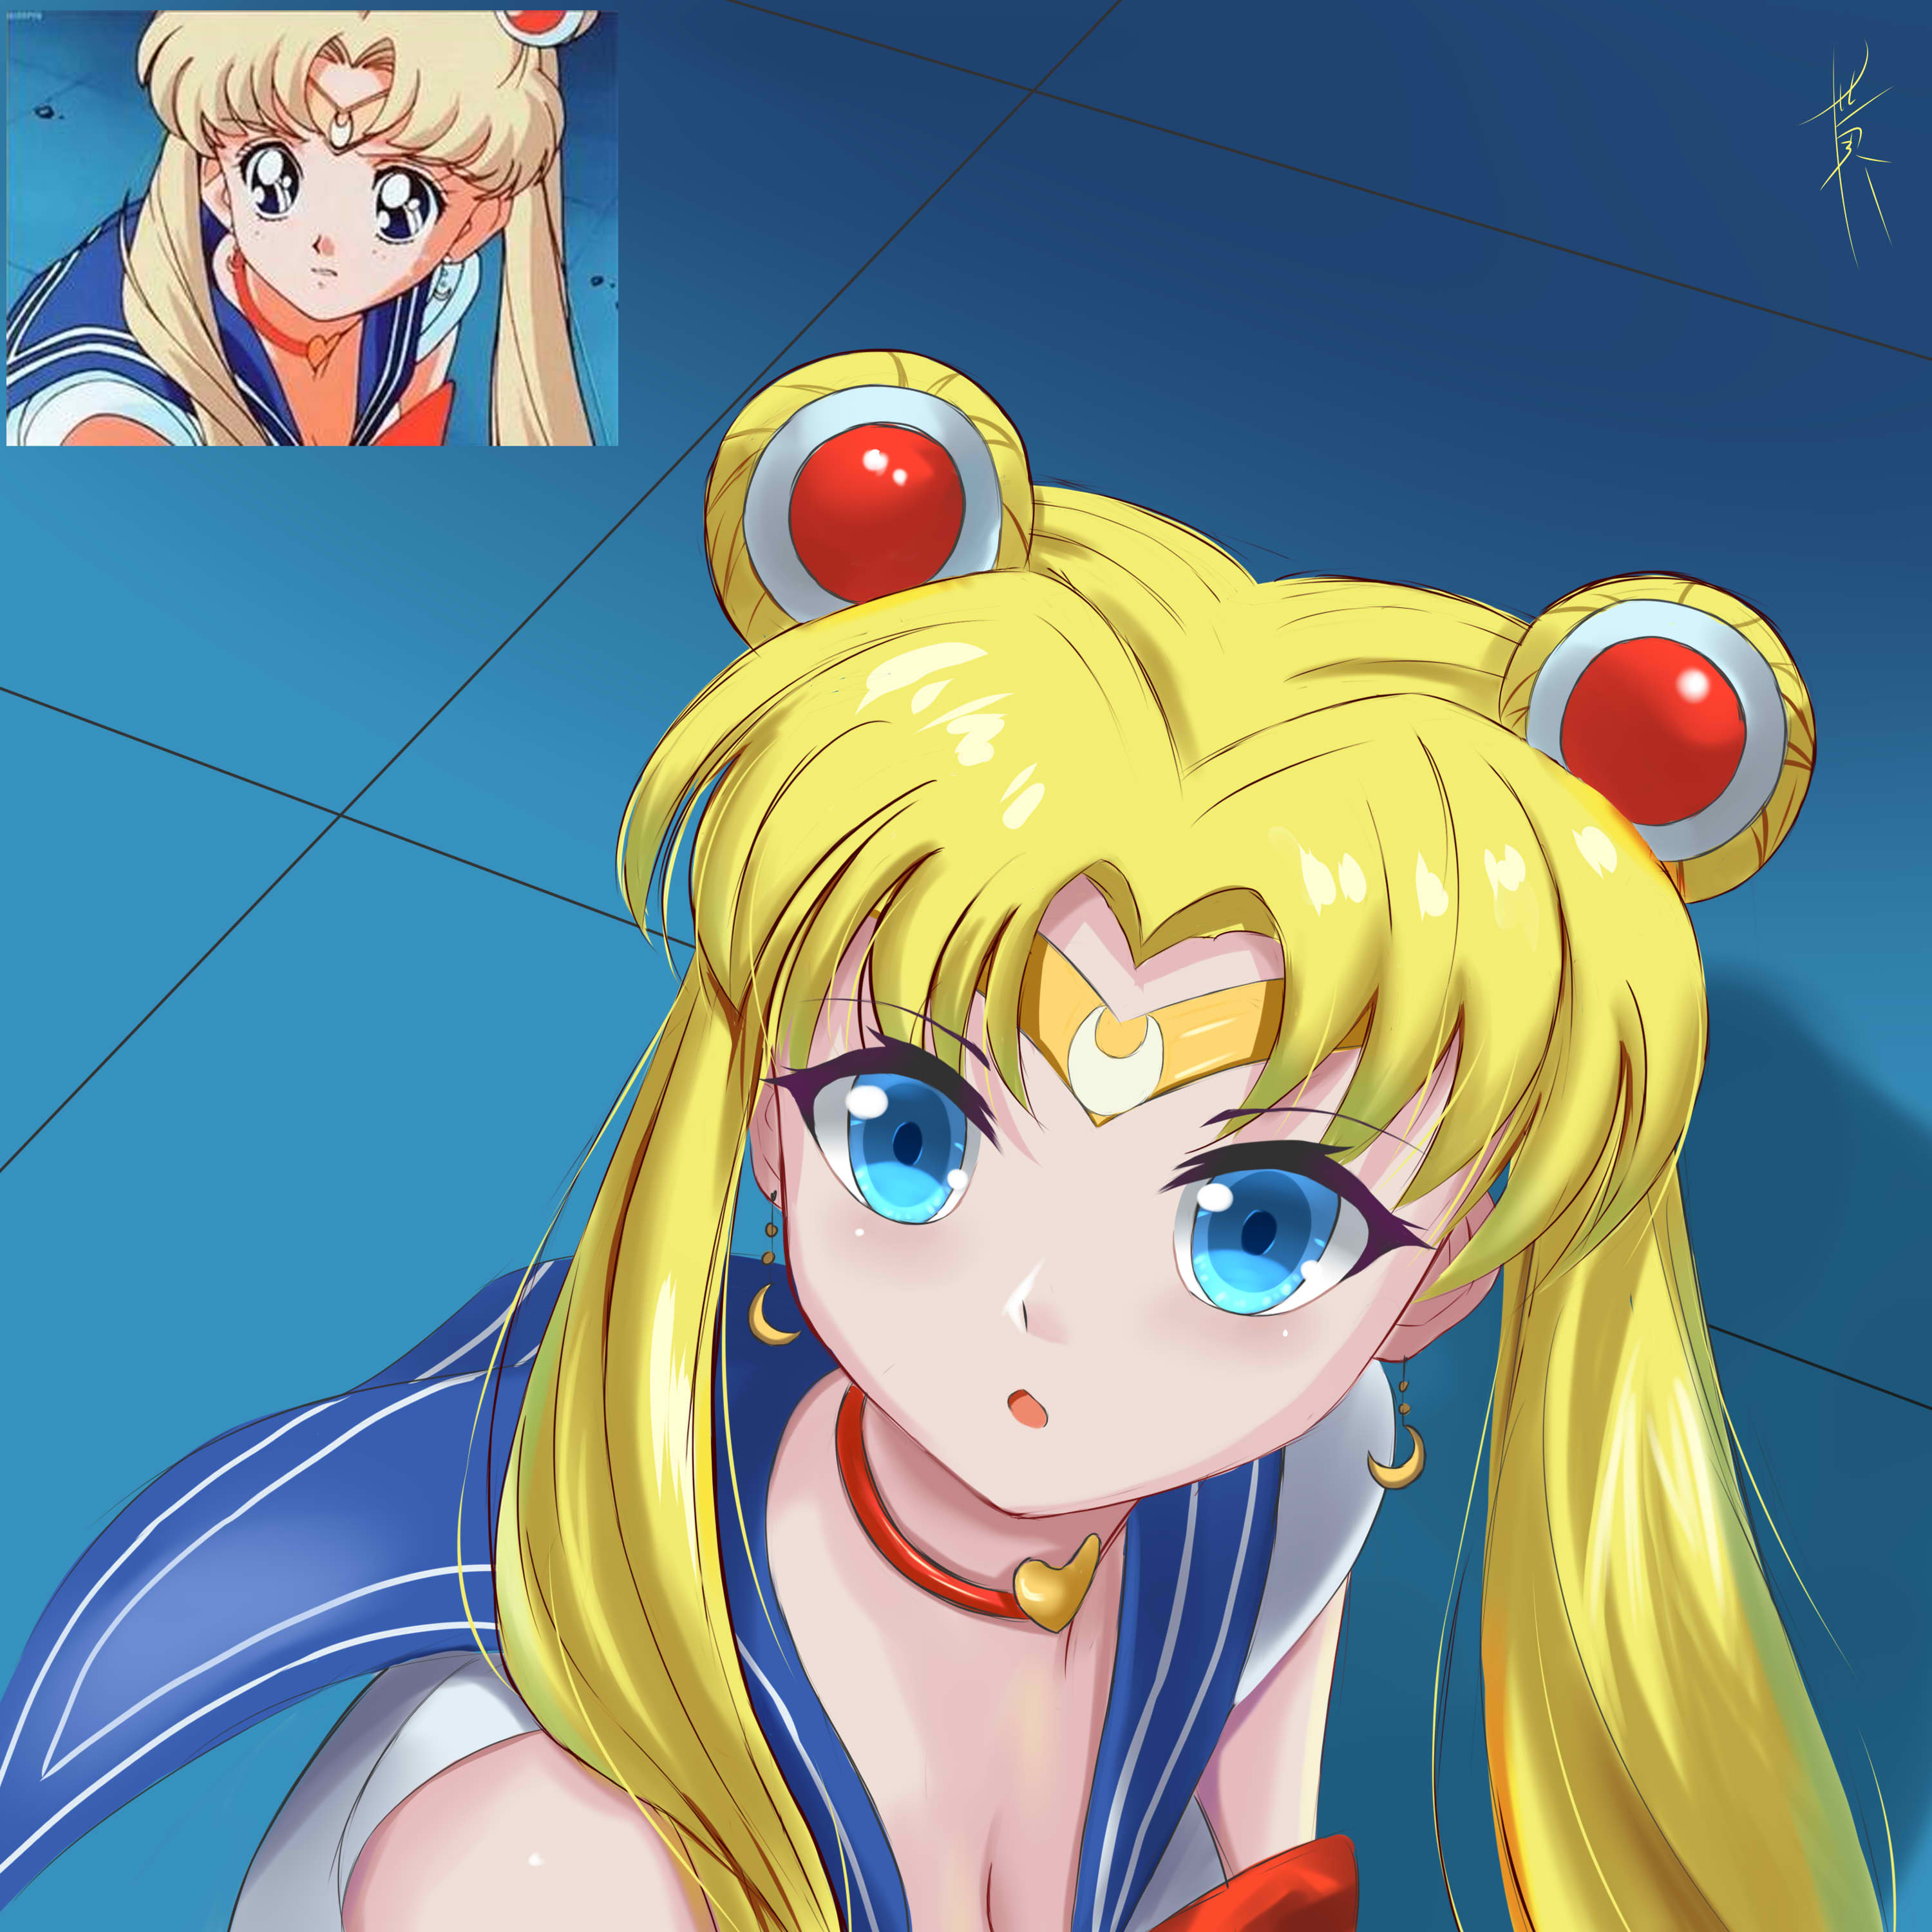 Sailor Moon redraw challenge|美少女战士|セーラームーン(キャラクター)|セーラームーンチャレンジ|sailormoonredraw|触手 - 画师通